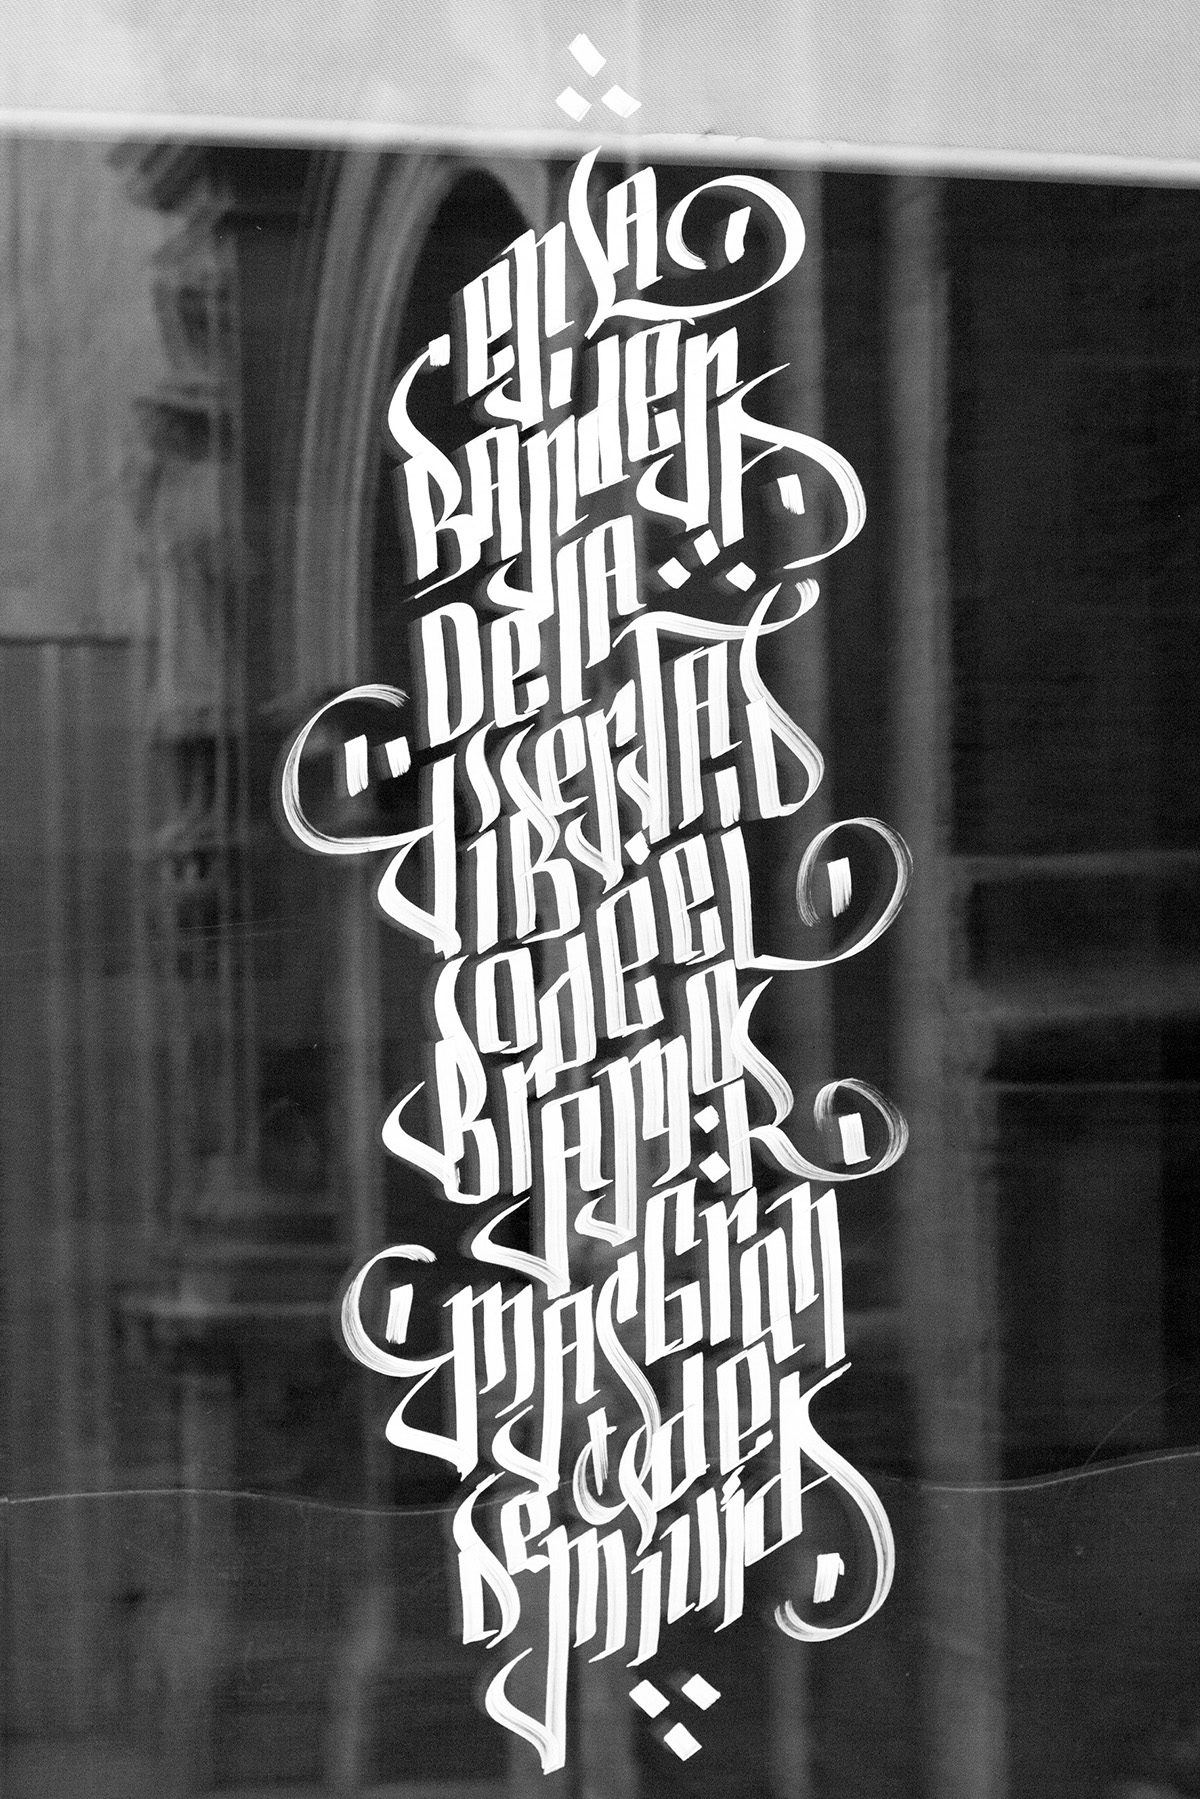 Lorca Federico Garcia Lorca granada streets art is not a crime intervention BrooklynCreates calligraffiti